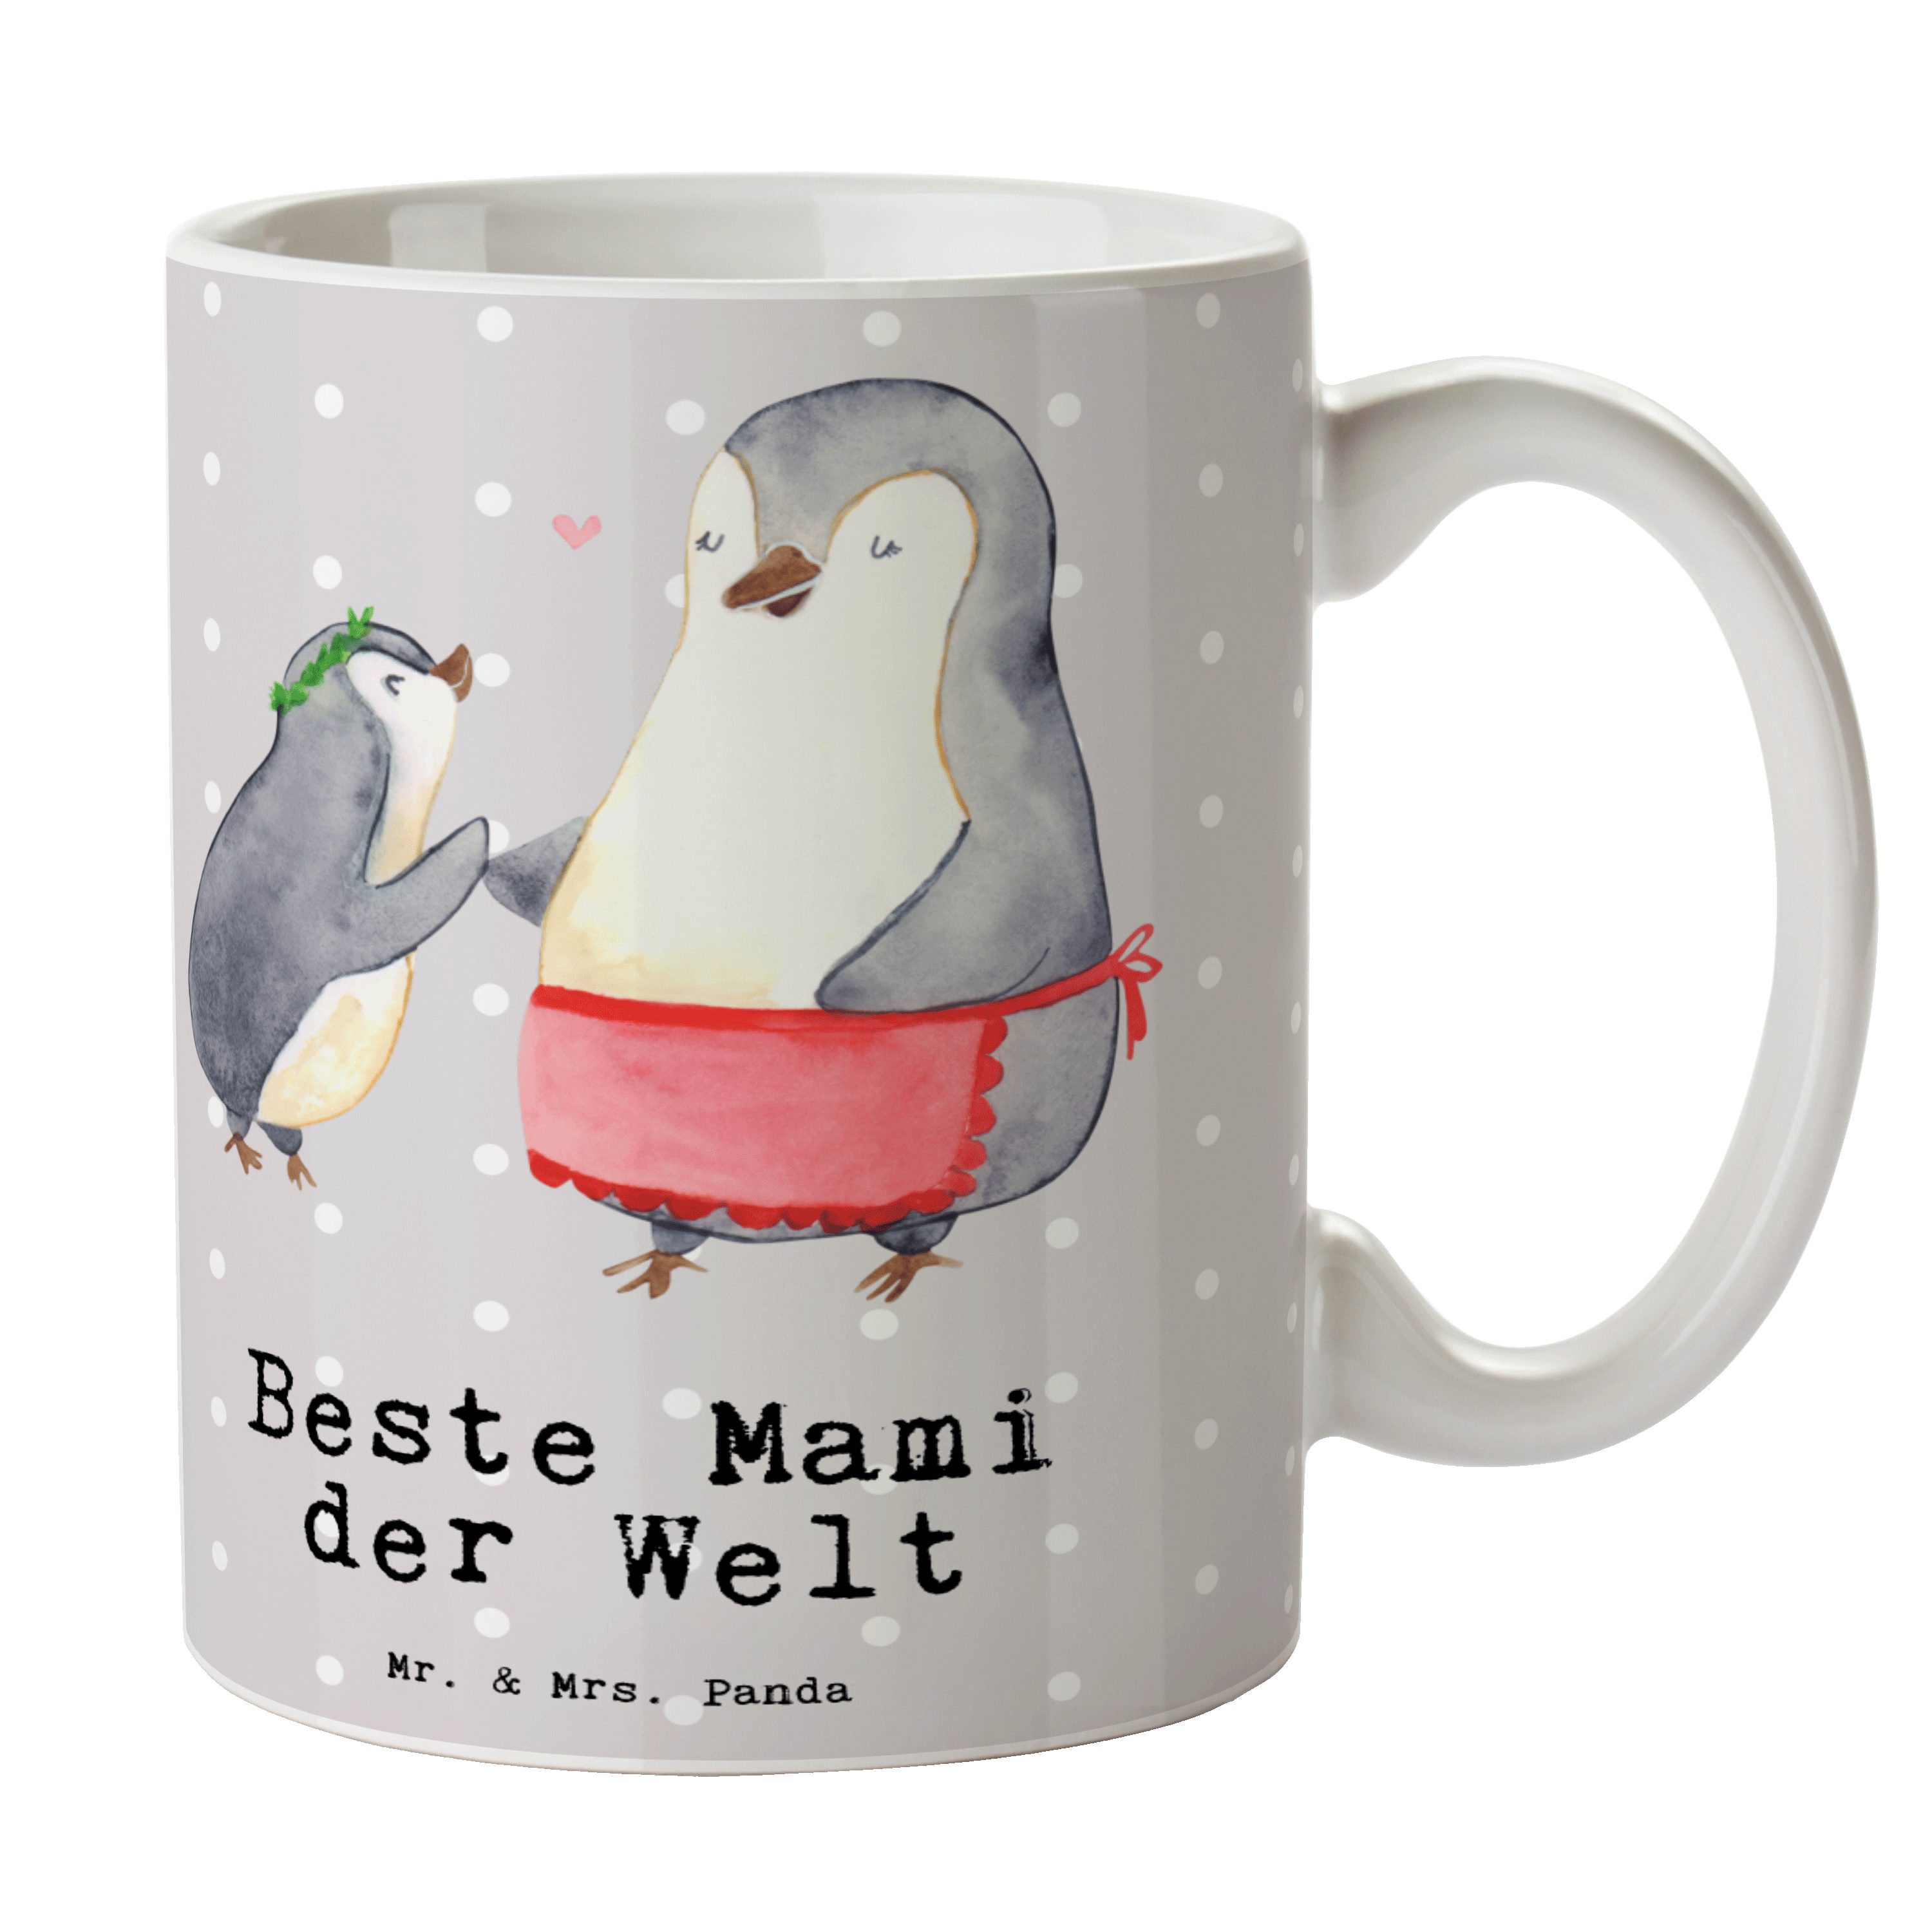 Mr. & Mrs. Panda Tasse Pinguin Beste Mami der Welt - Grau Pastell - Geschenk, Keramiktasse, Keramik